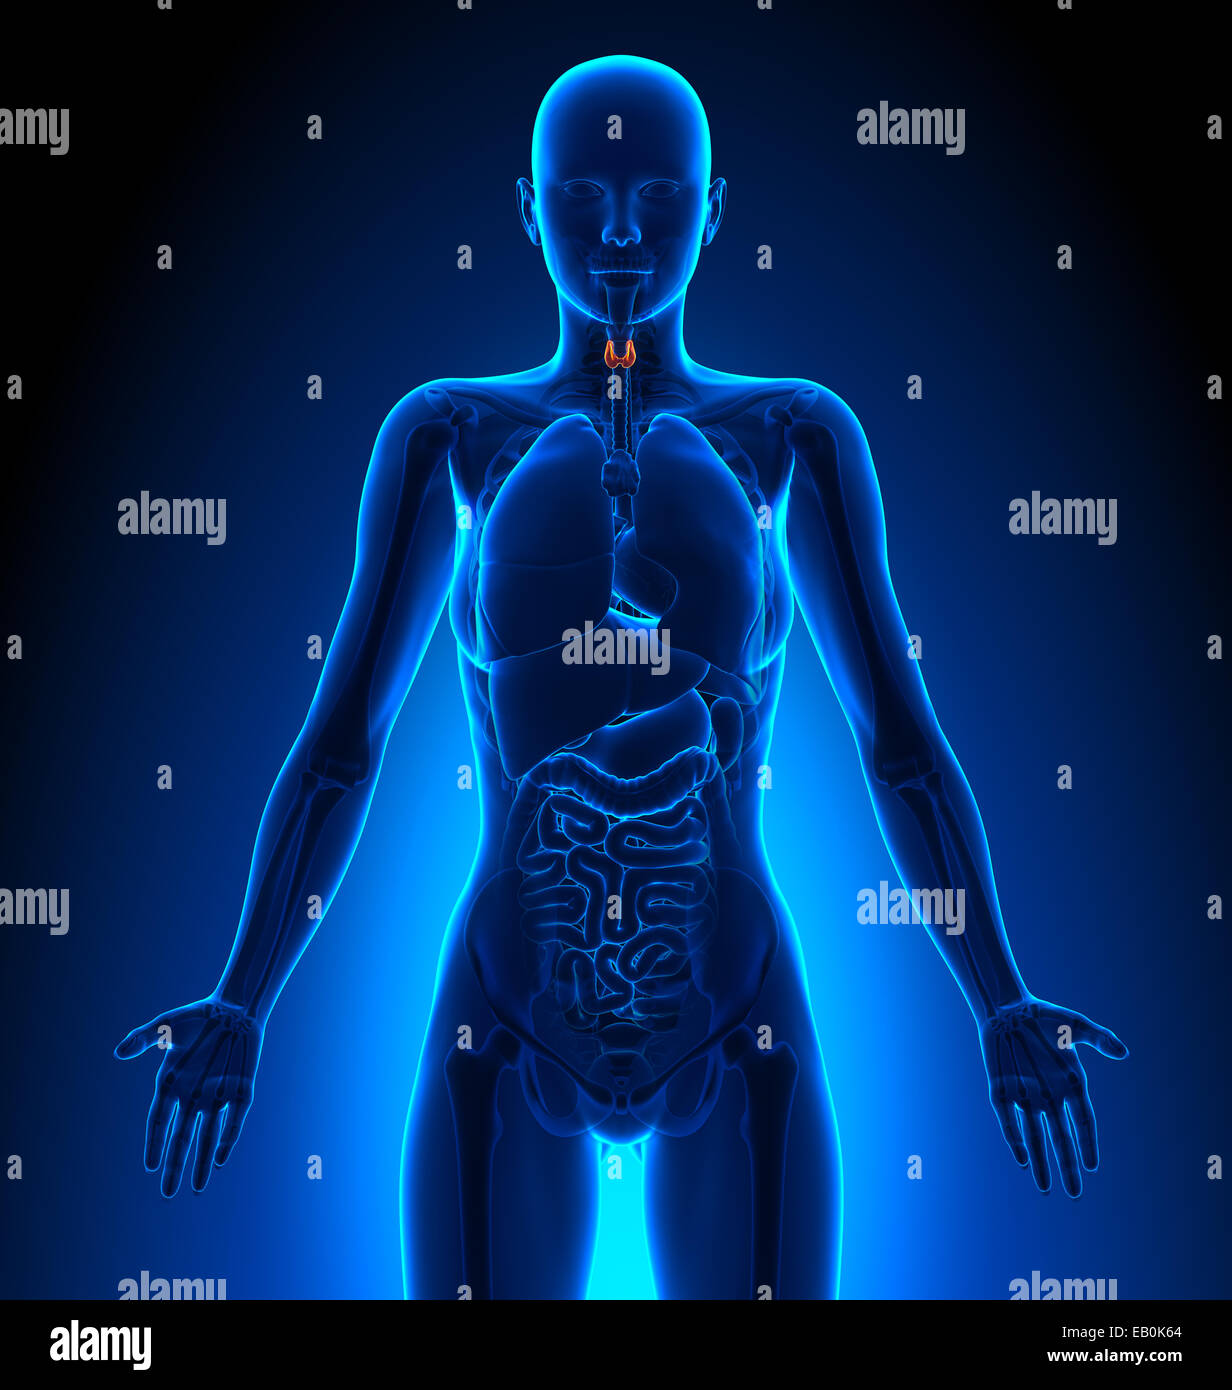 Thyroid - Female Organs - Human Anatomy Stock Photo